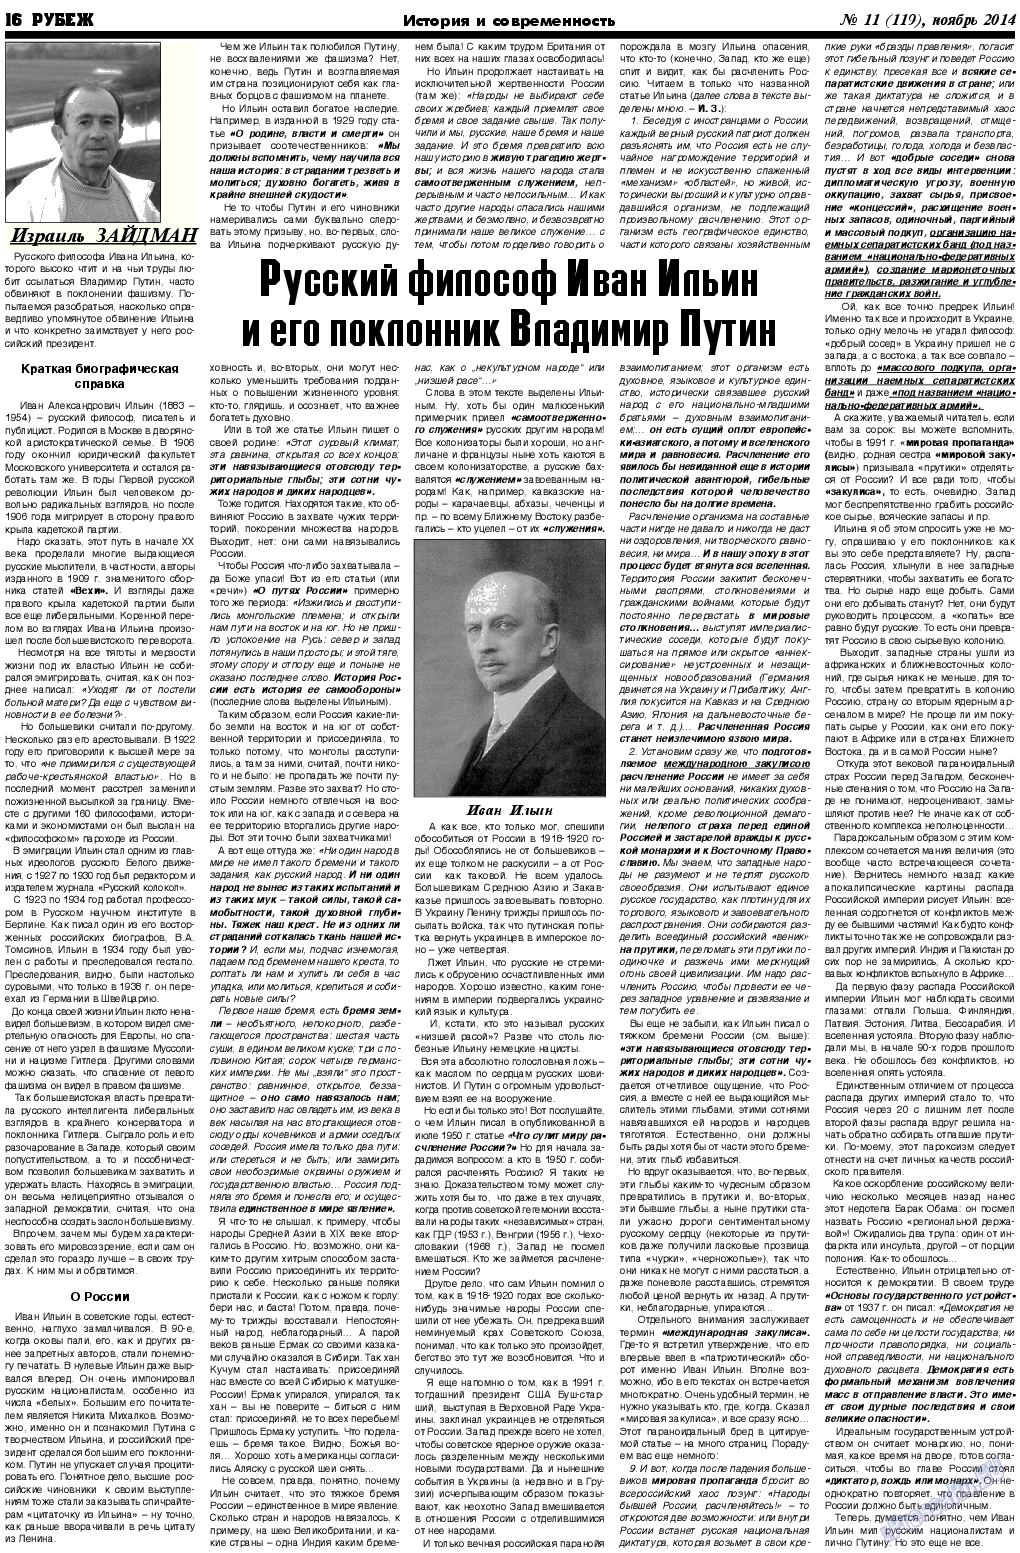 Рубеж, газета. 2014 №11 стр.16